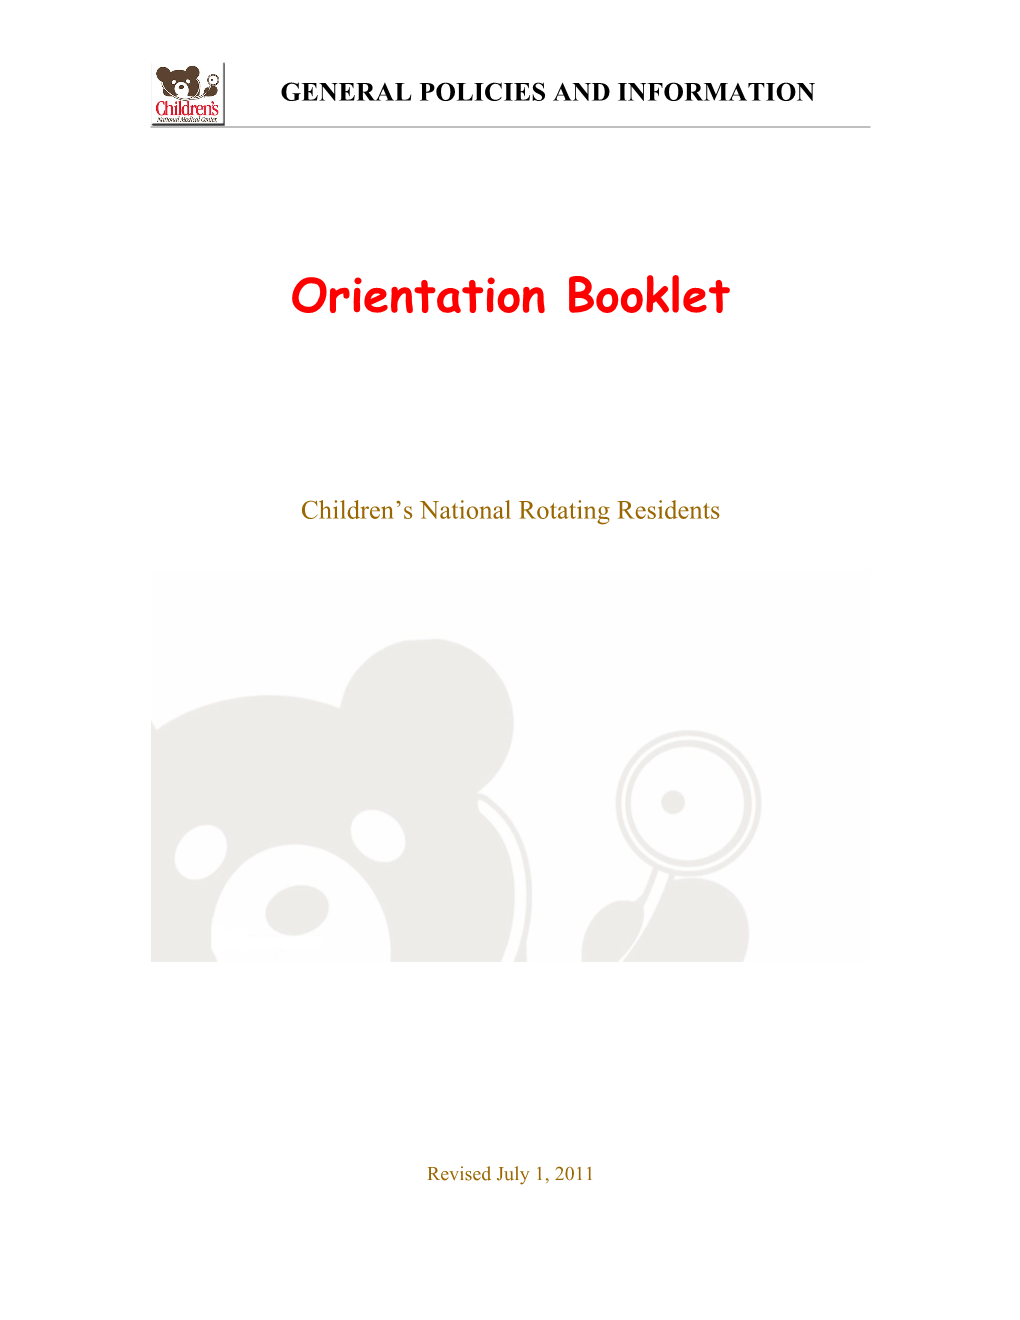 Orientation Booklet